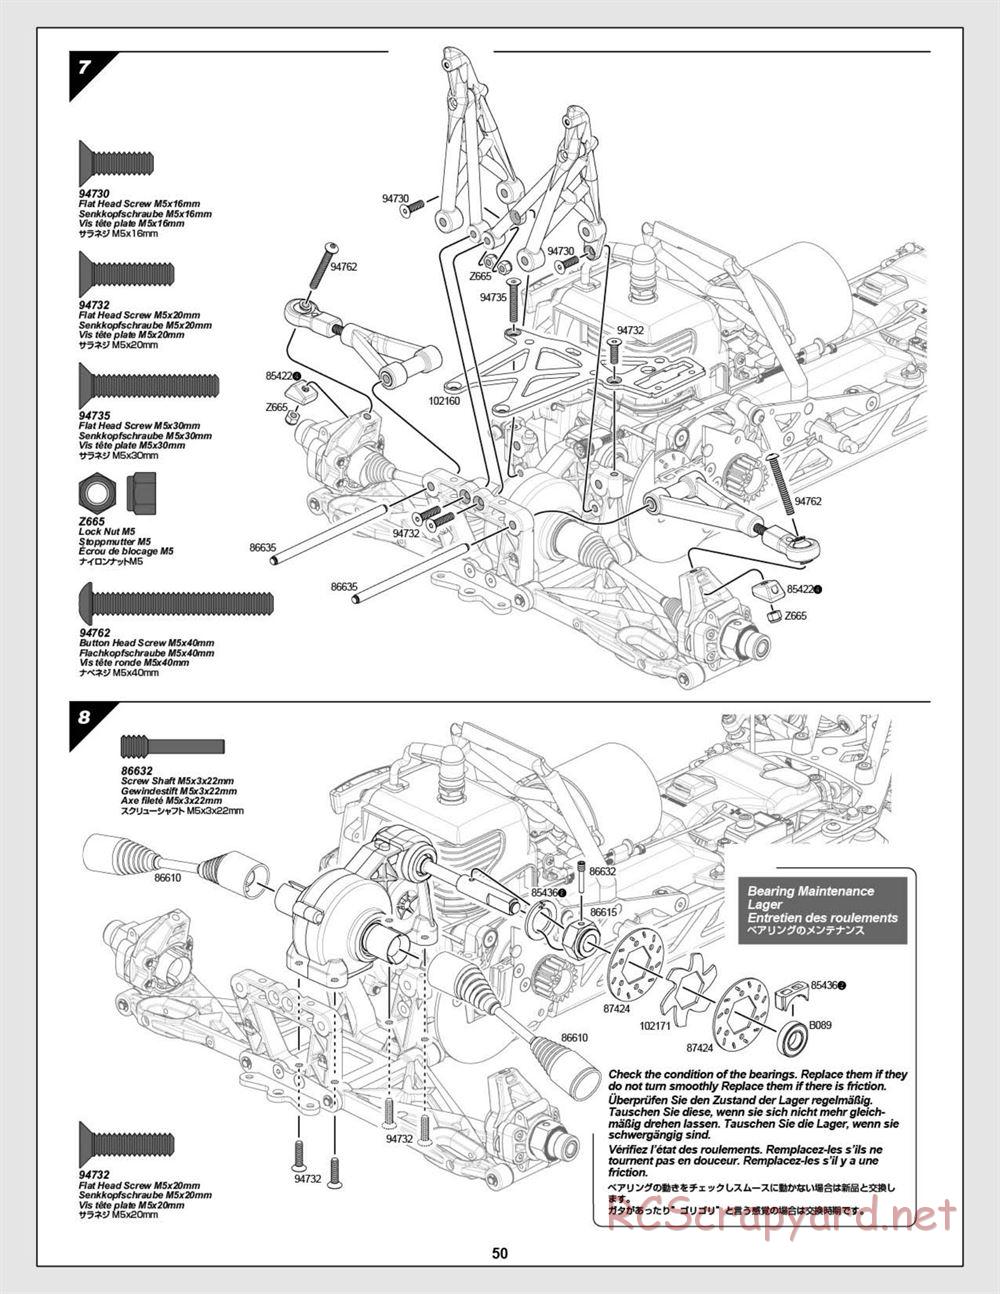 HPI - Baja 5B 2.0 RTR - Manual - Page 50